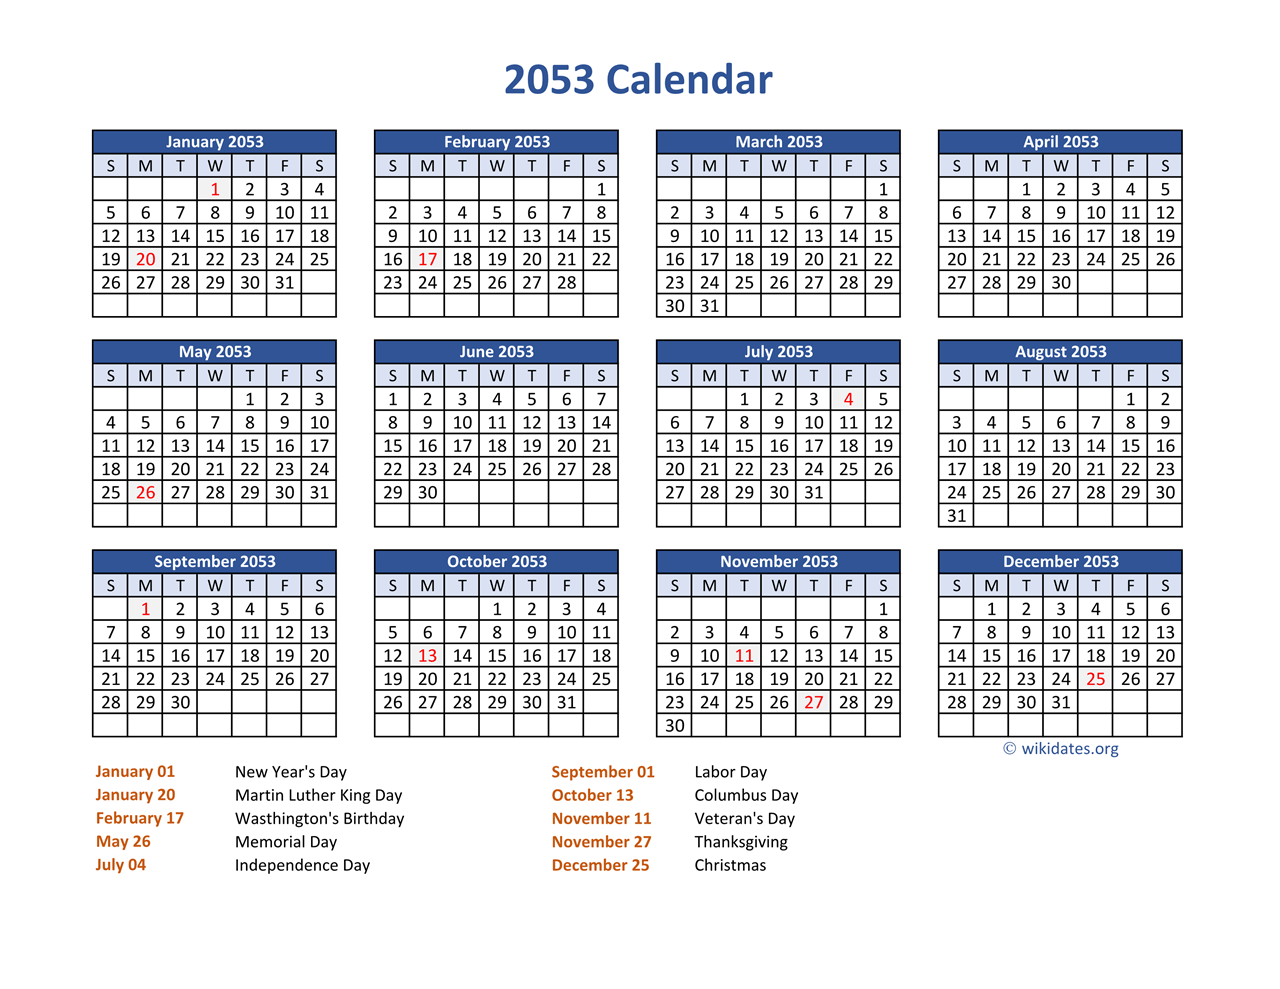 PDF Calendar 2053 with Federal Holidays | WikiDates.org